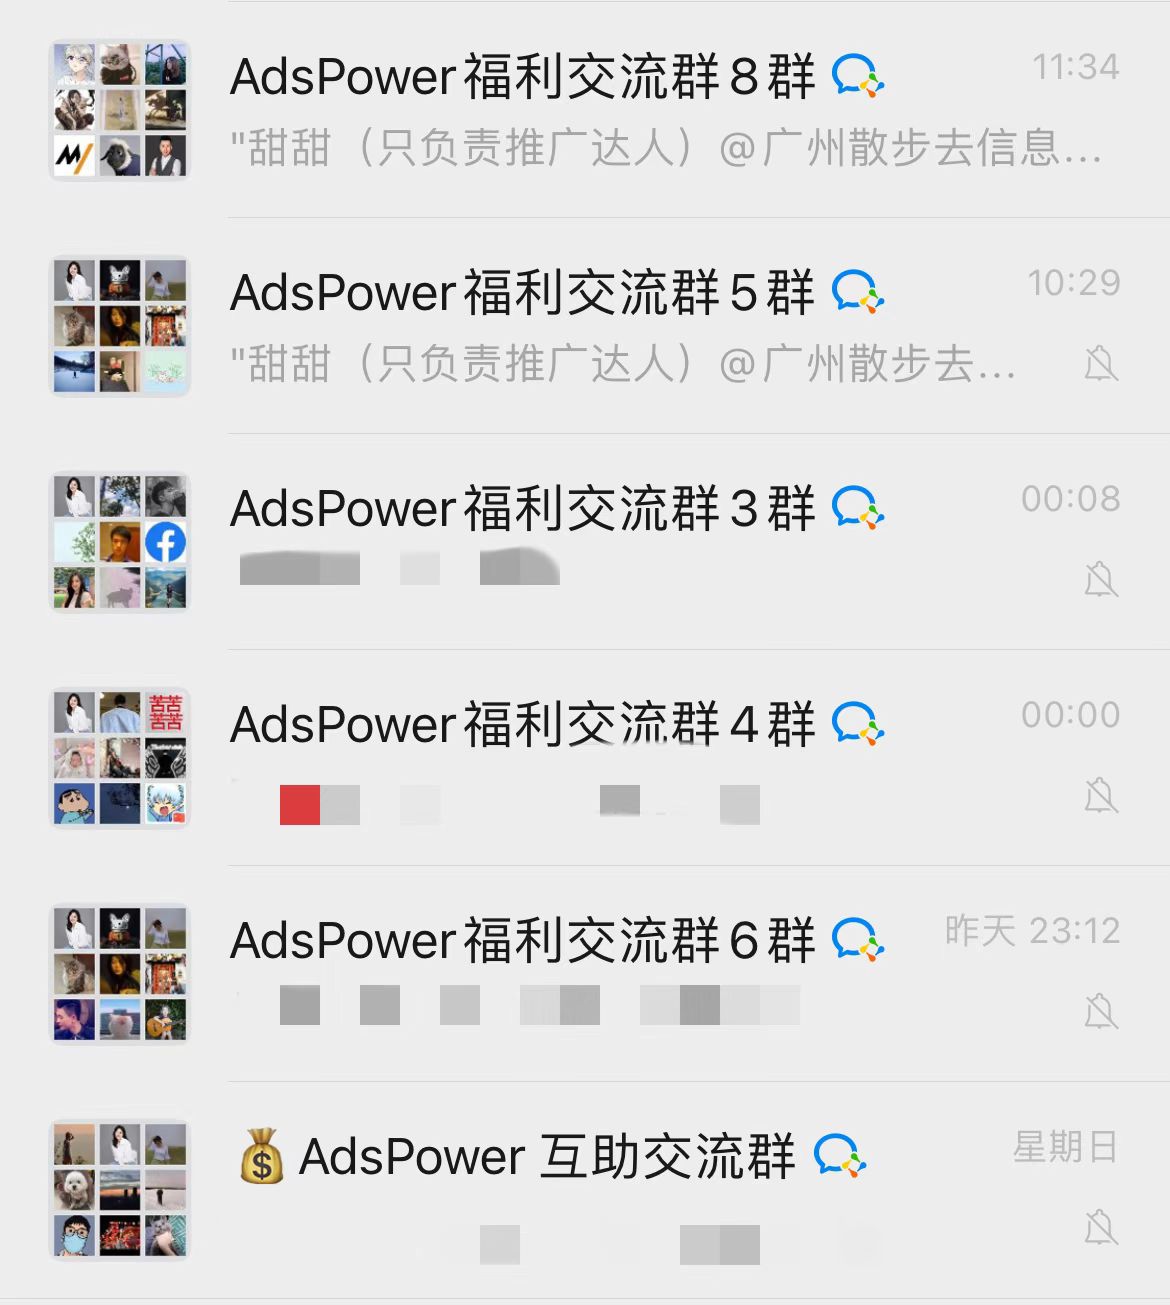 AdsPower交流群